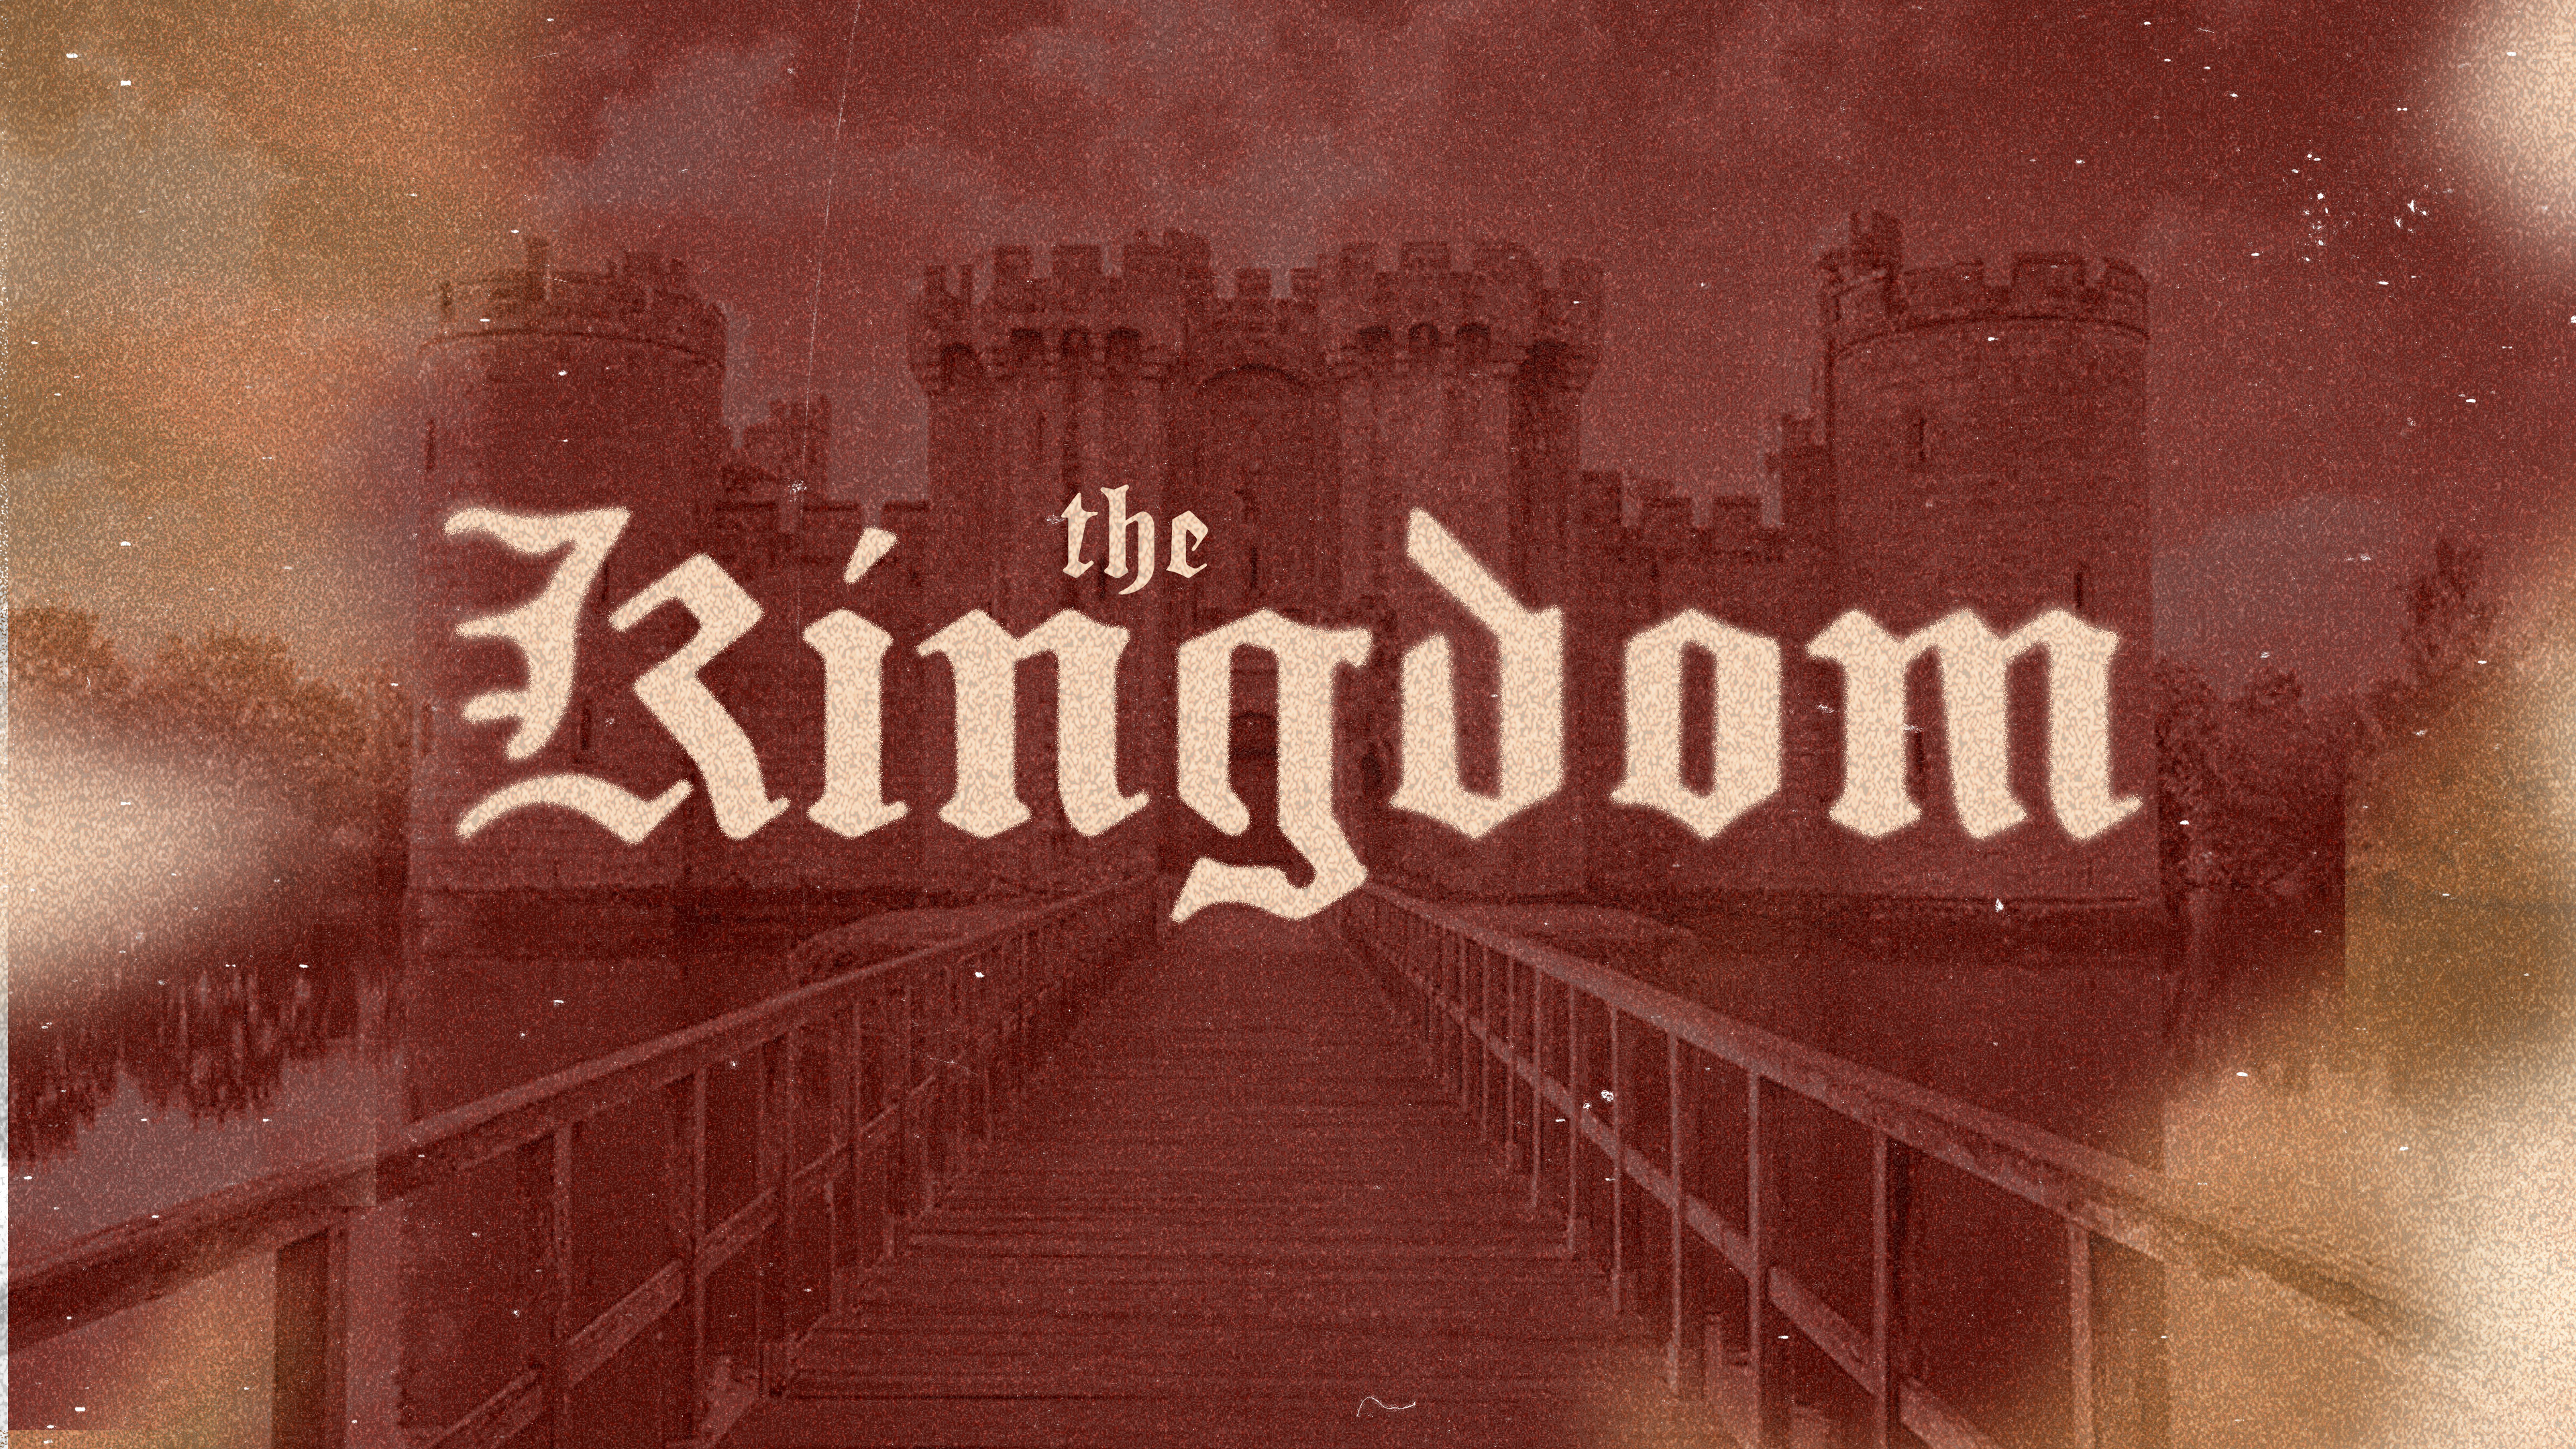 The Kingdom banner